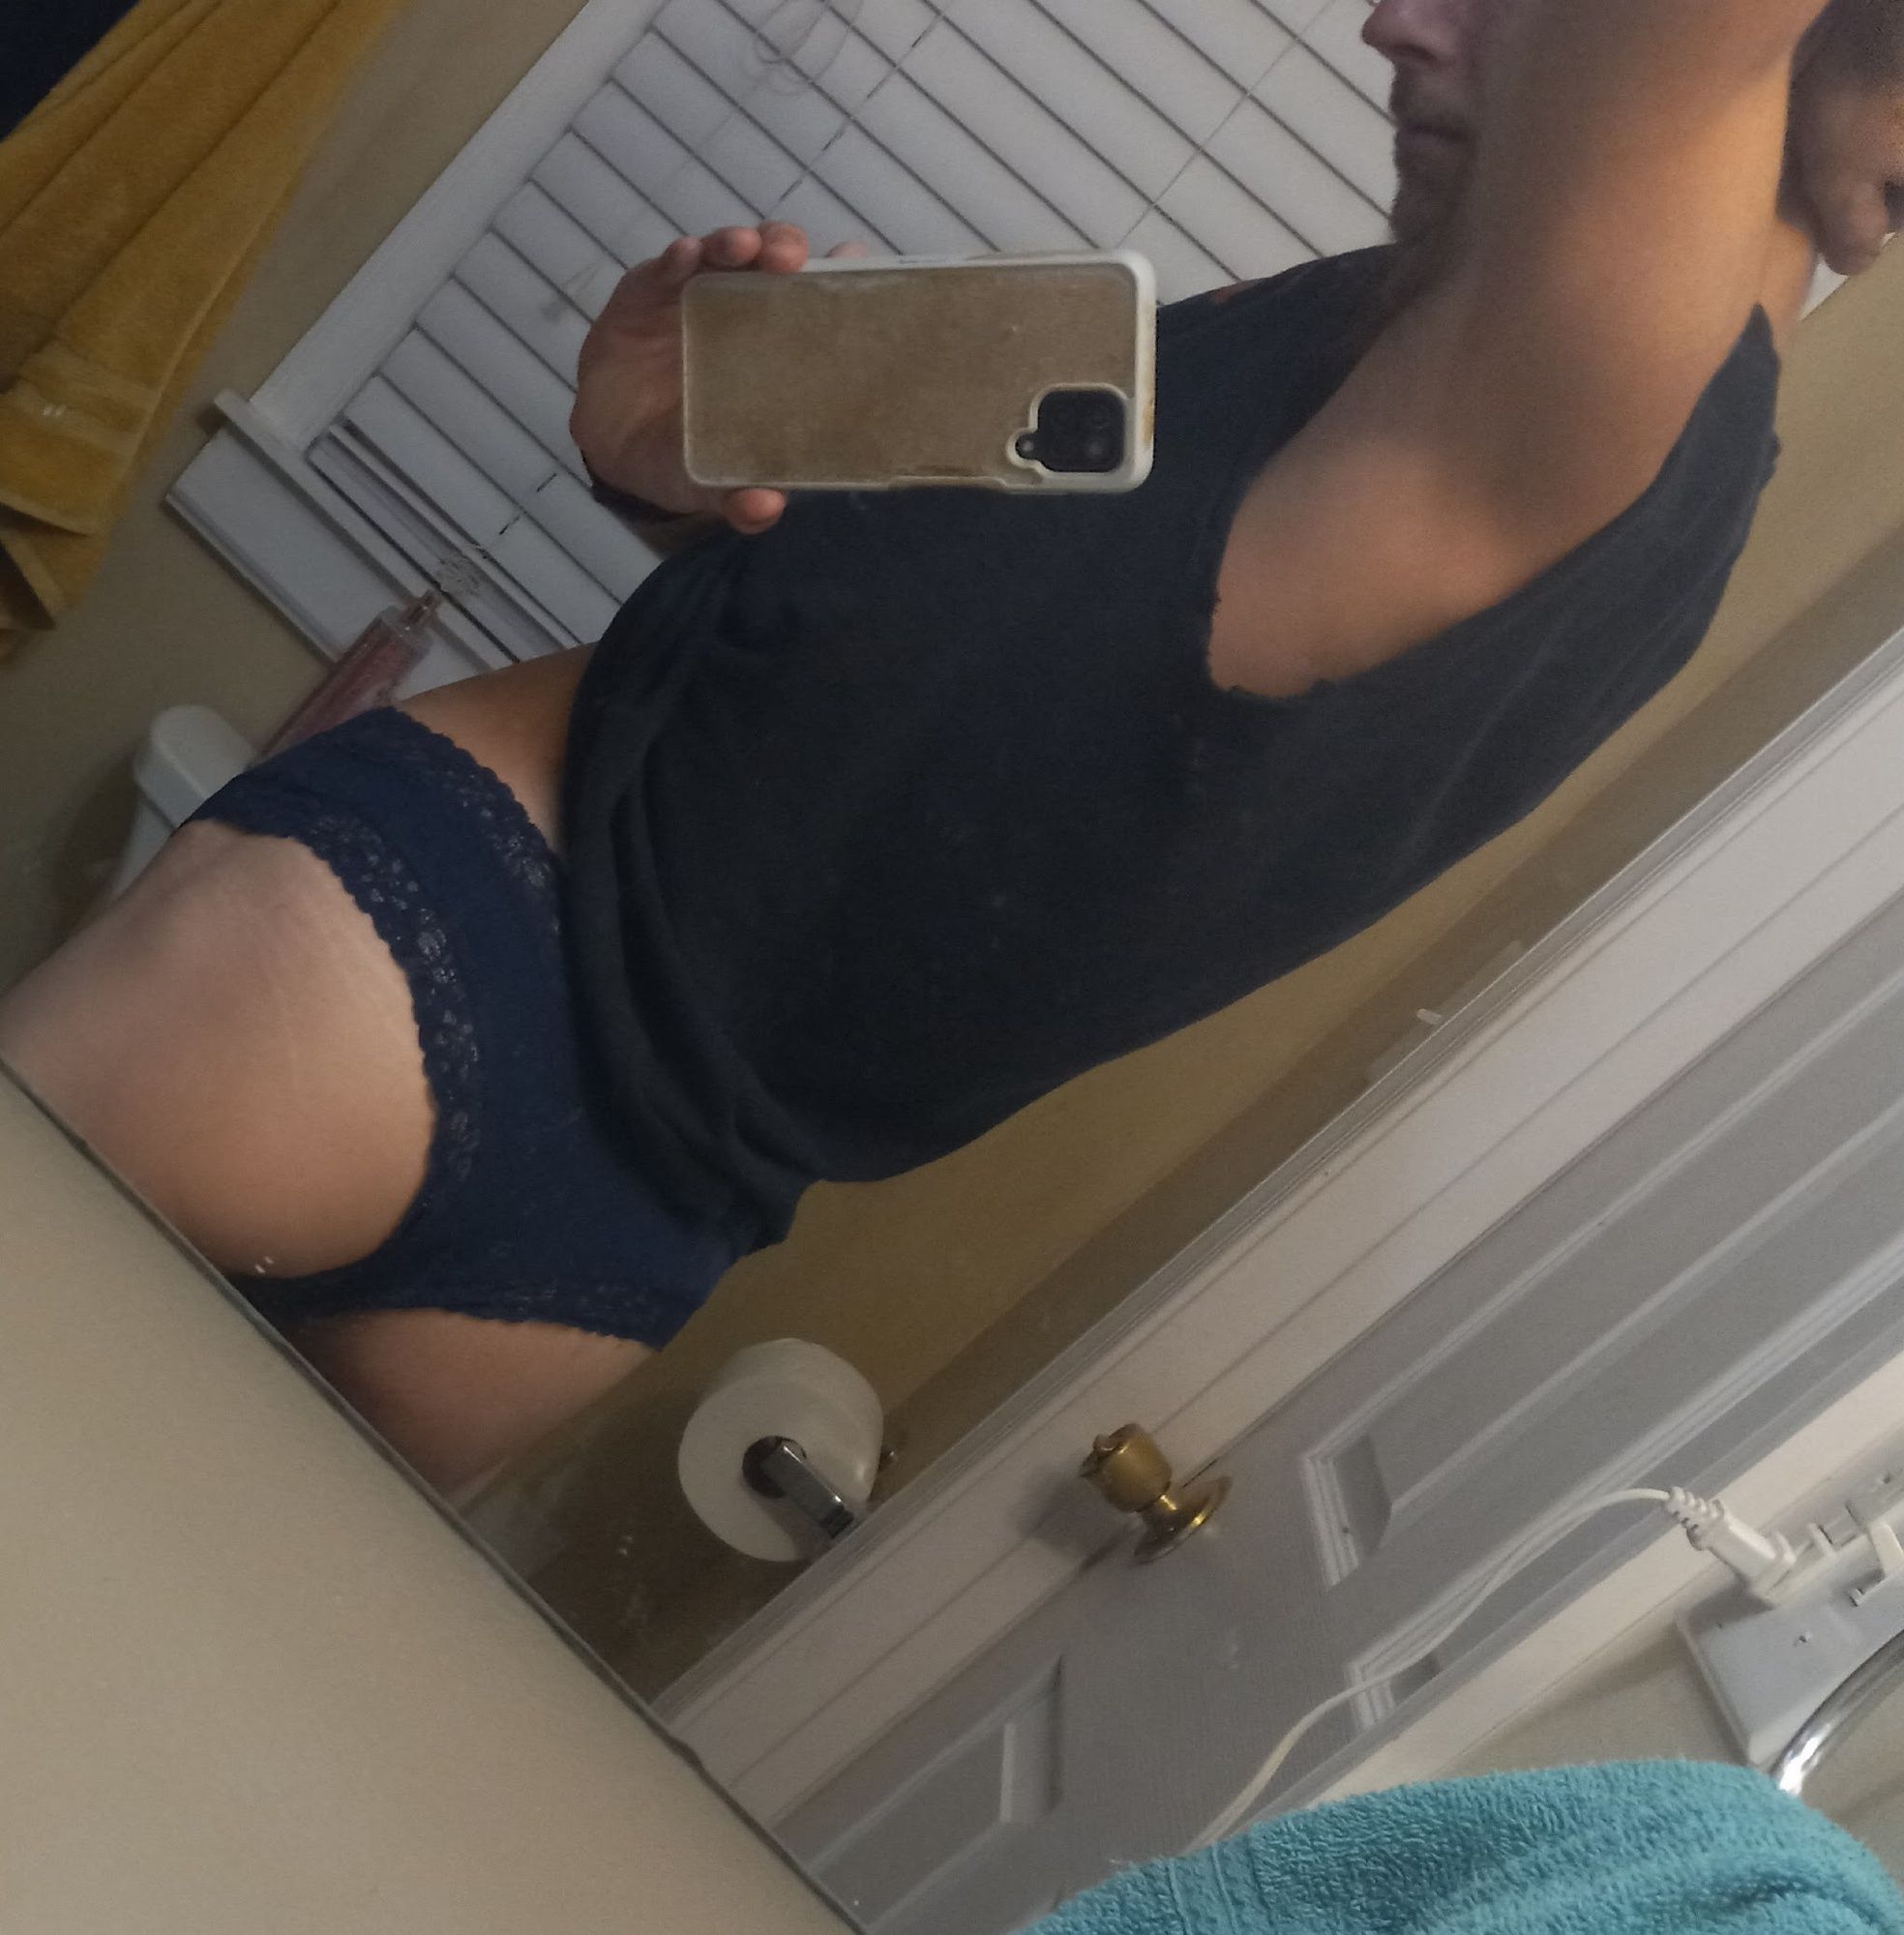 My favorite ass selfies! 